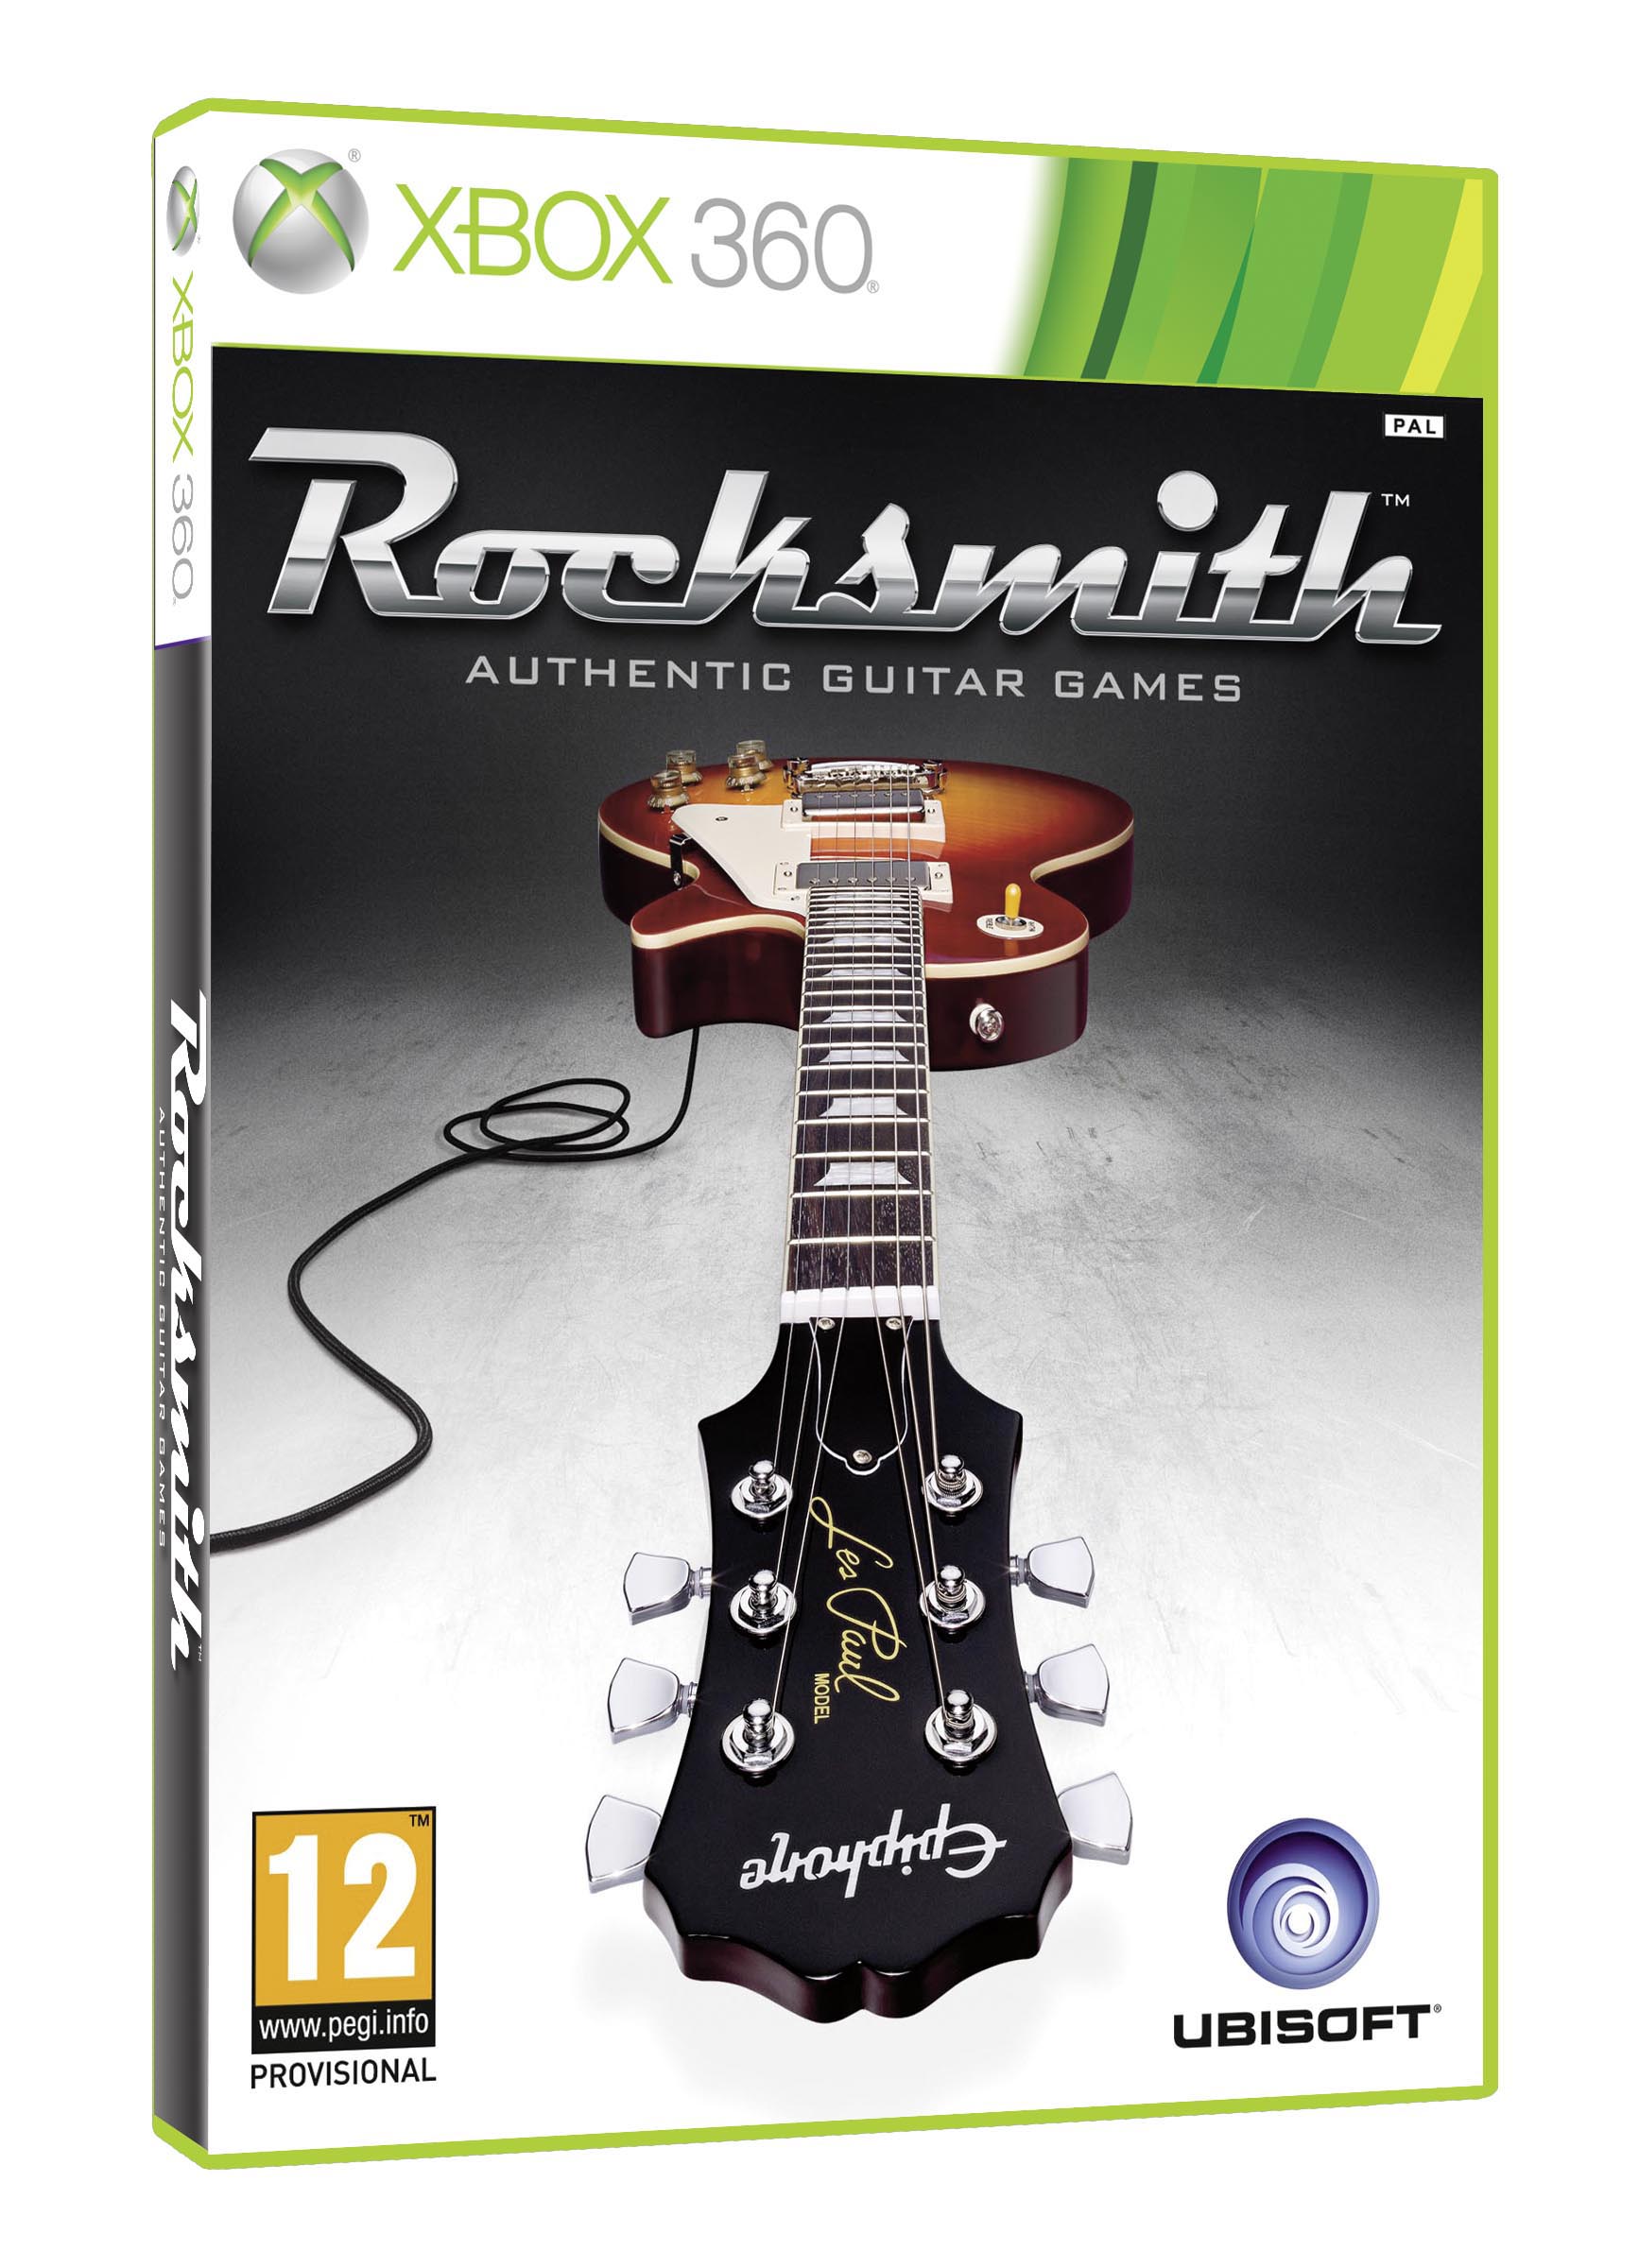 Rocksmith 2014 dlc xbox 360 jtag